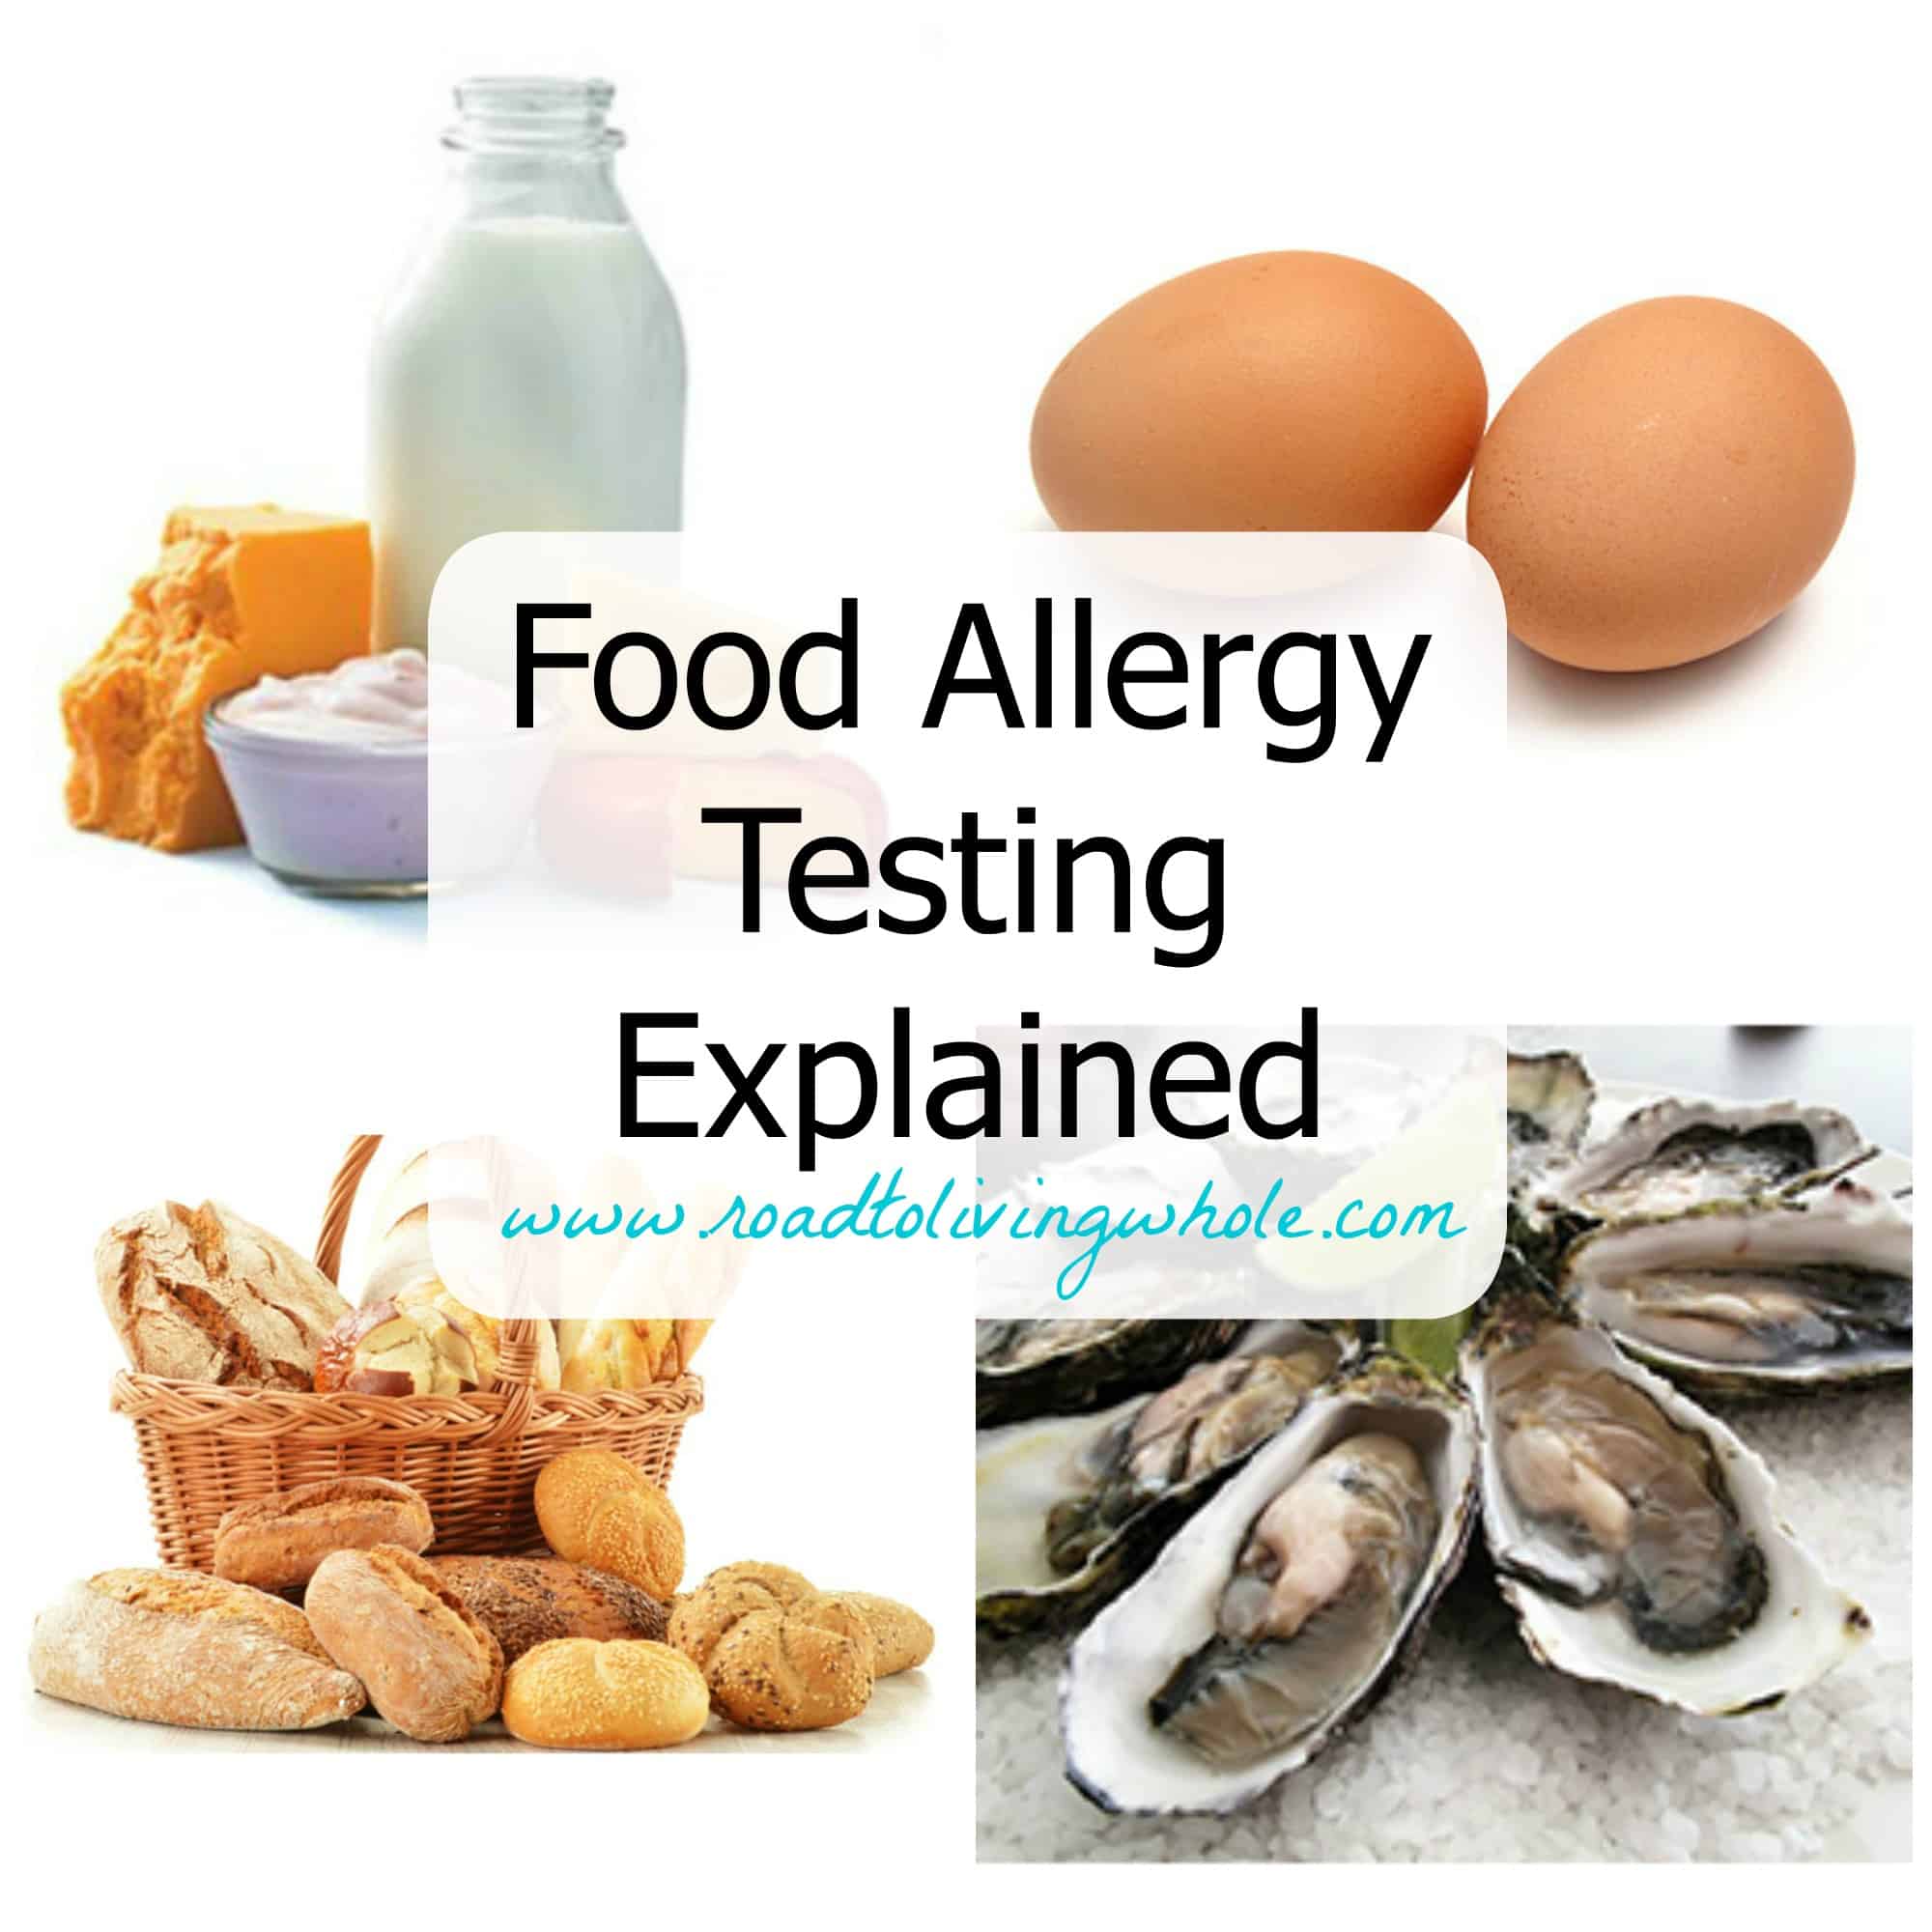 Food Allergy Testing Explained